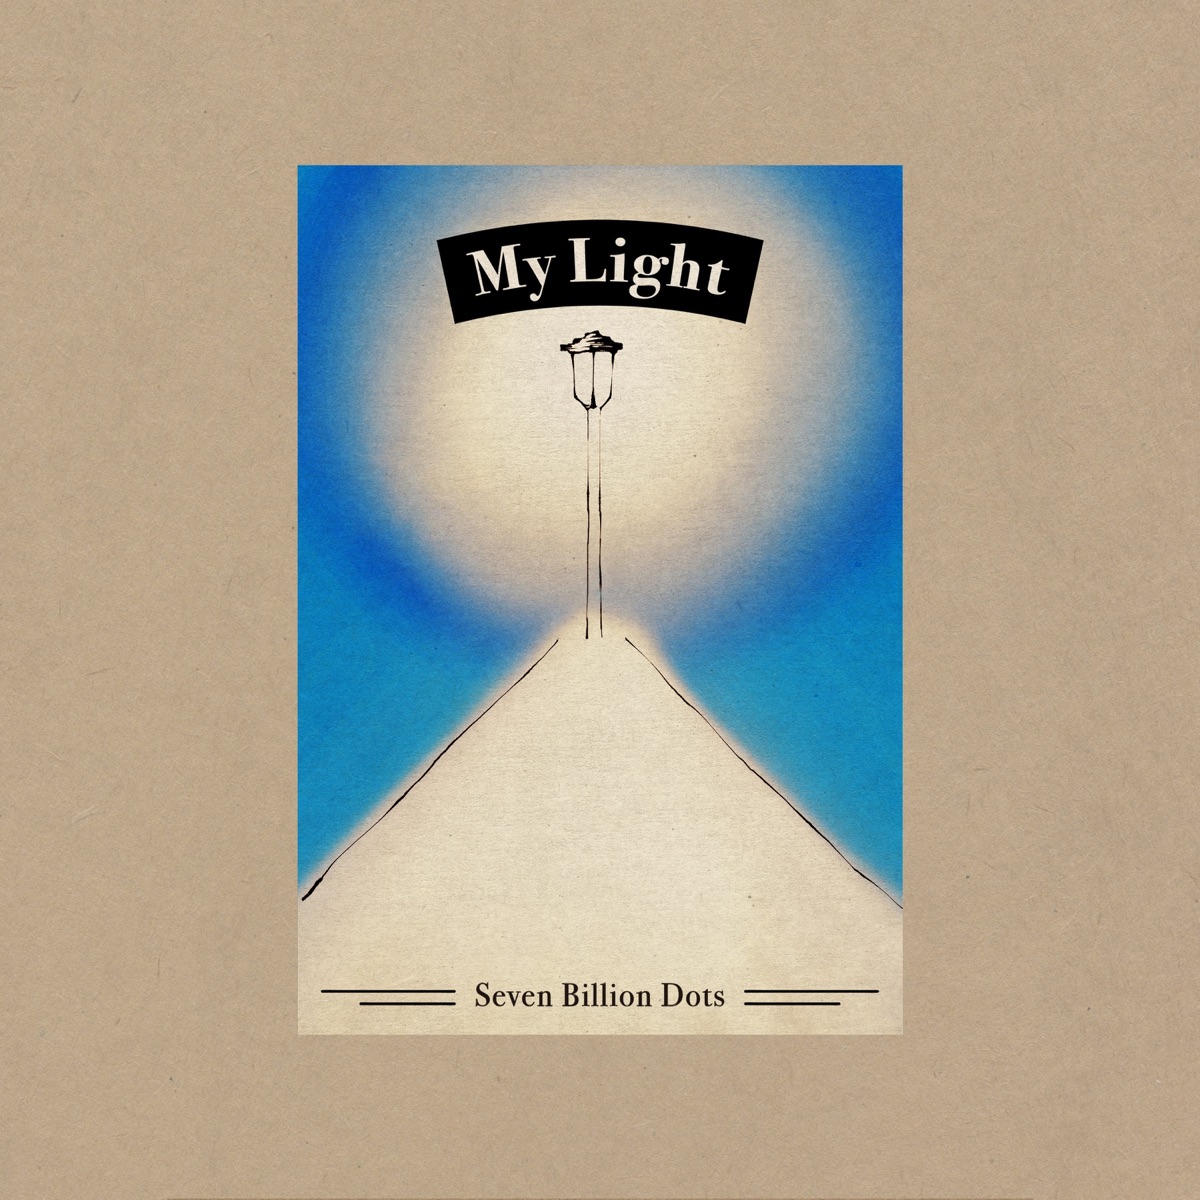 『Seven Billion Dots - My Light』収録の『My Light』ジャケット